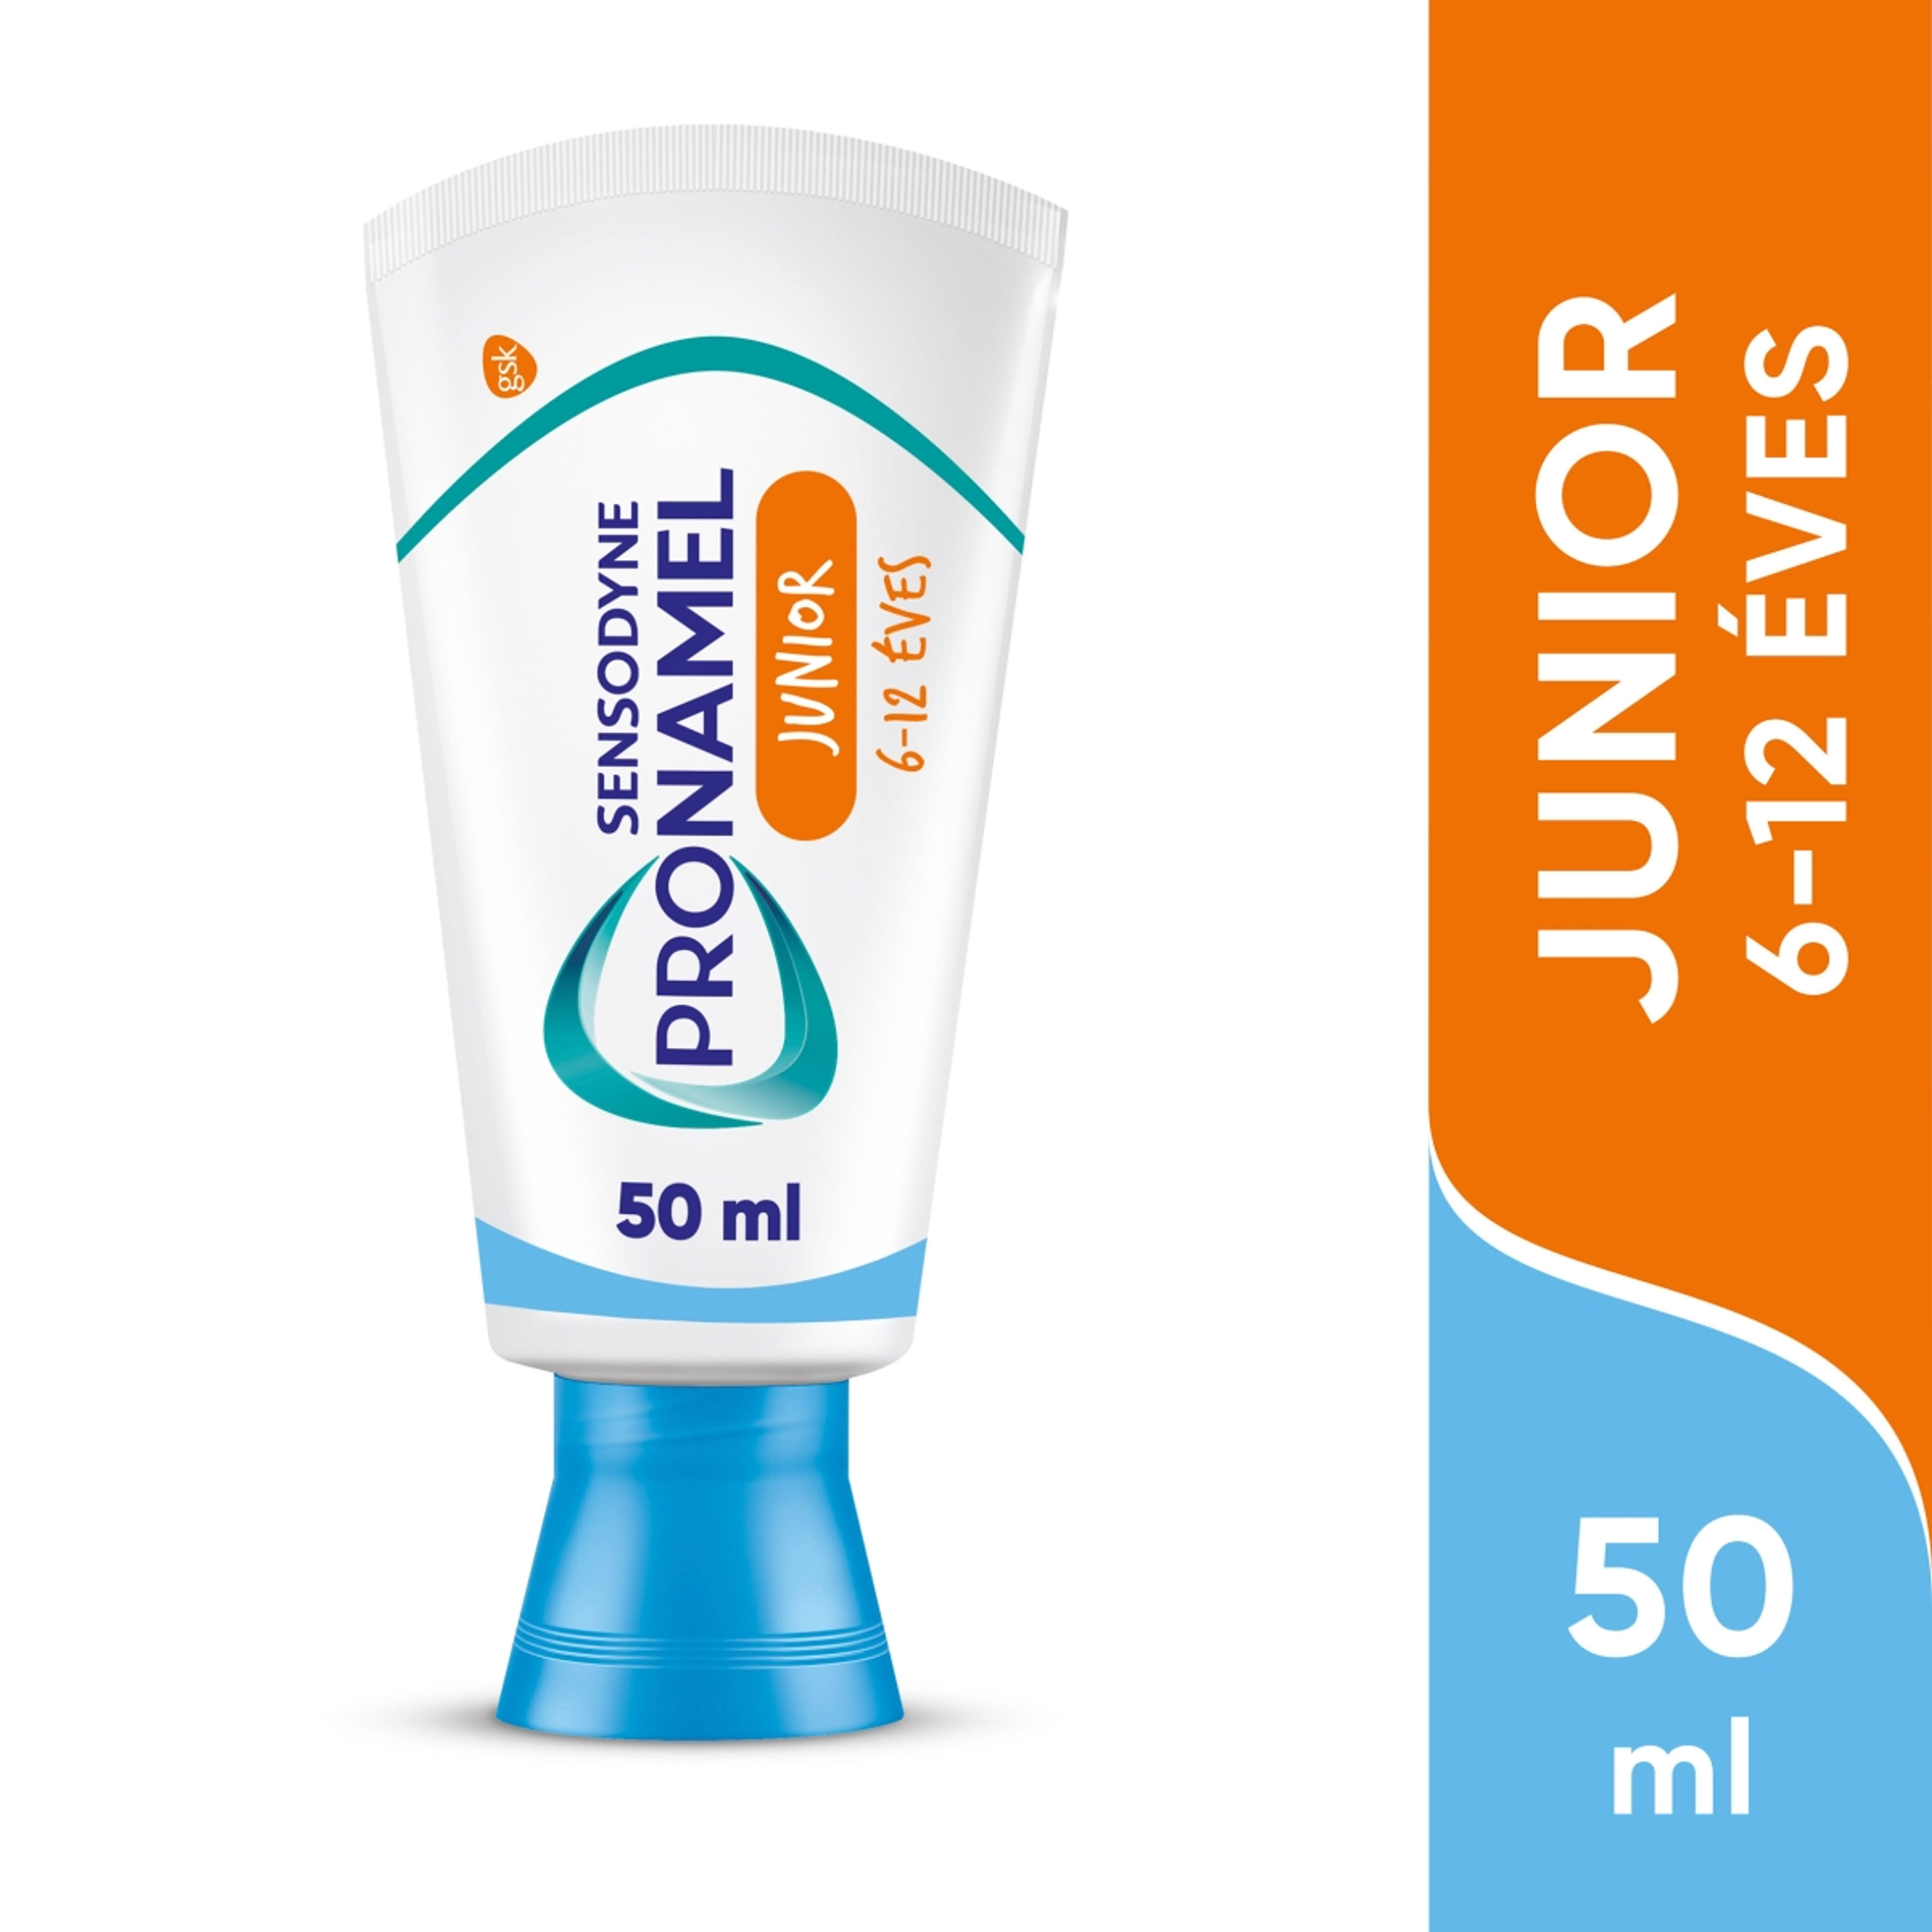 Sensodyne Pronamel Junior fogkrém - 50 ml